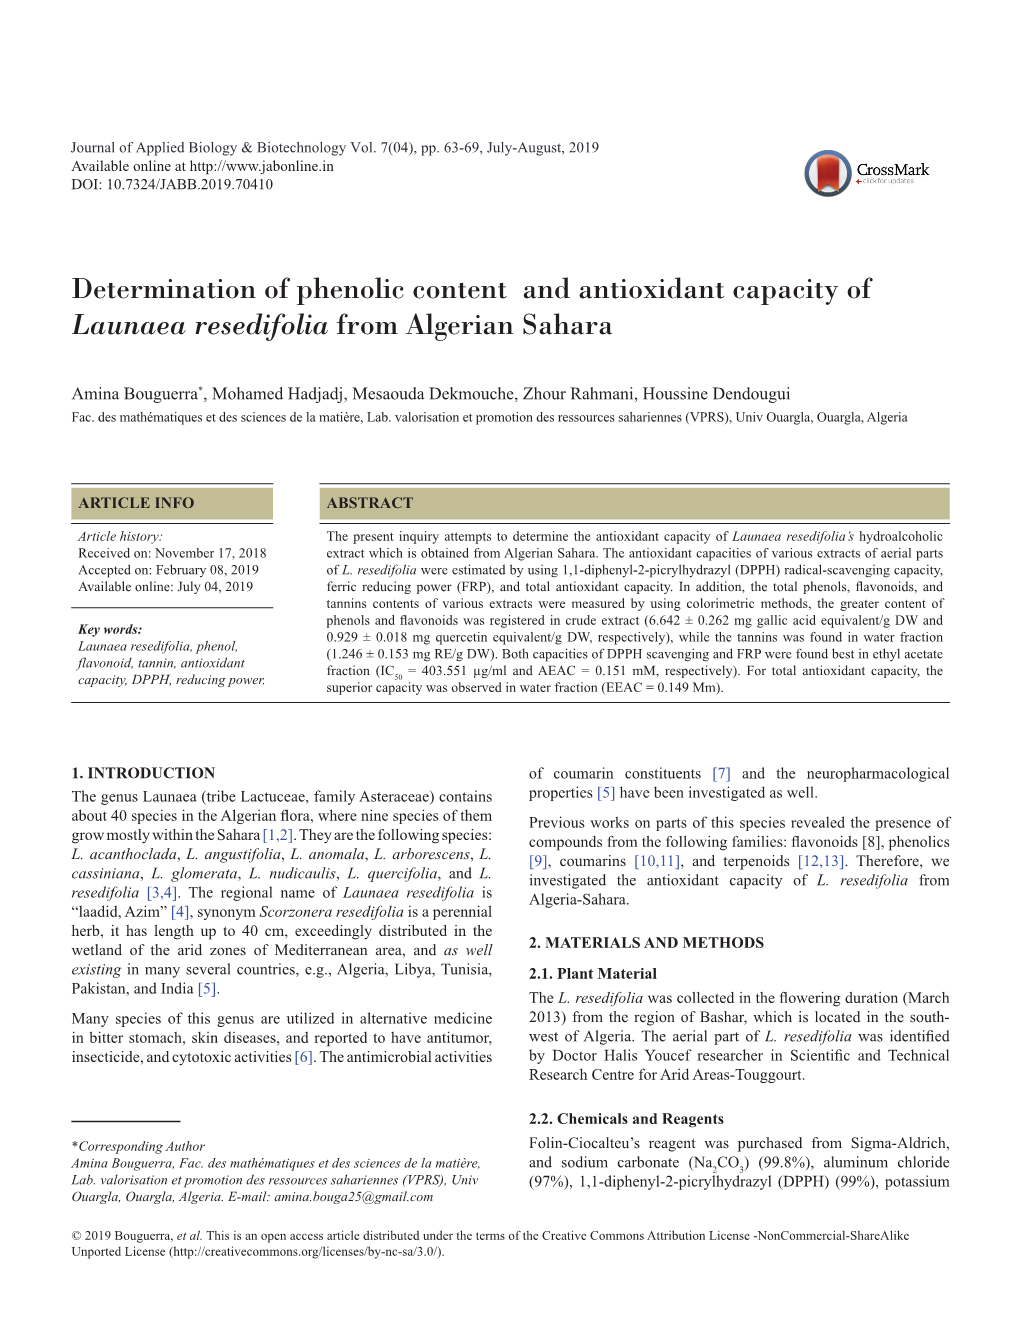 Determination of Phenolic Content and Antioxidant Capacity of Launaea Resedifolia from Algerian Sahara